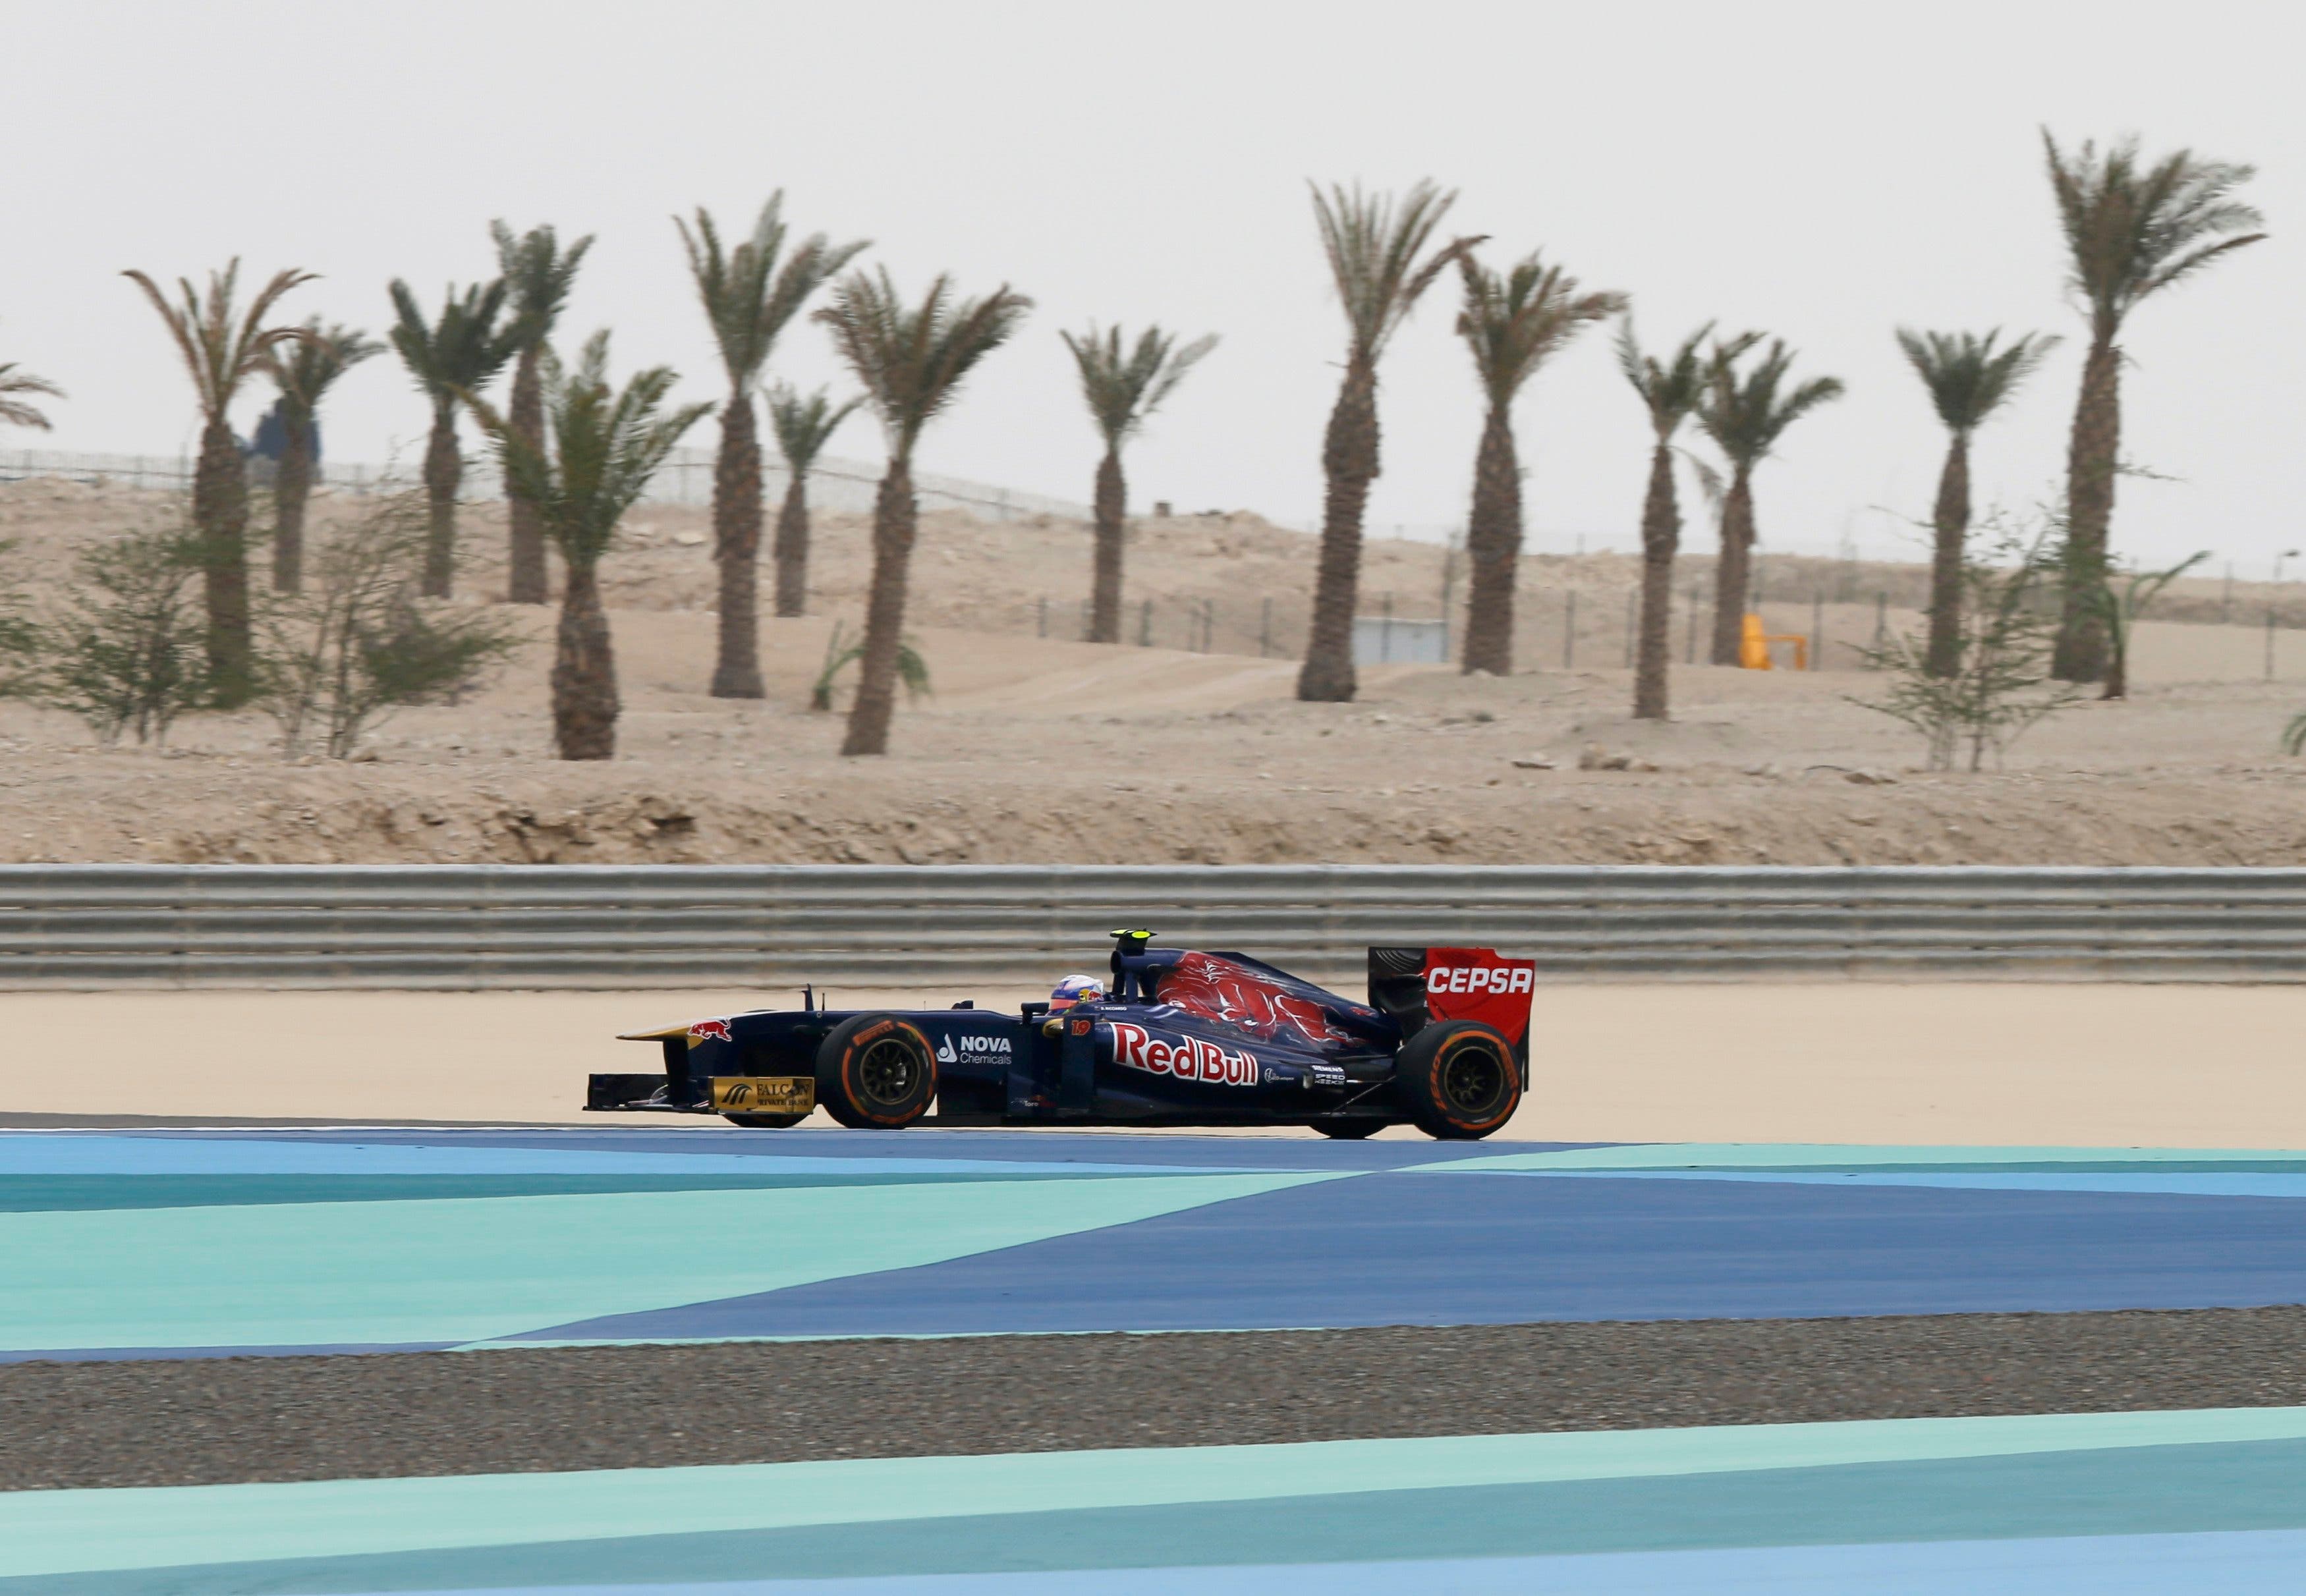 Bahrain Formula One 1st practice session